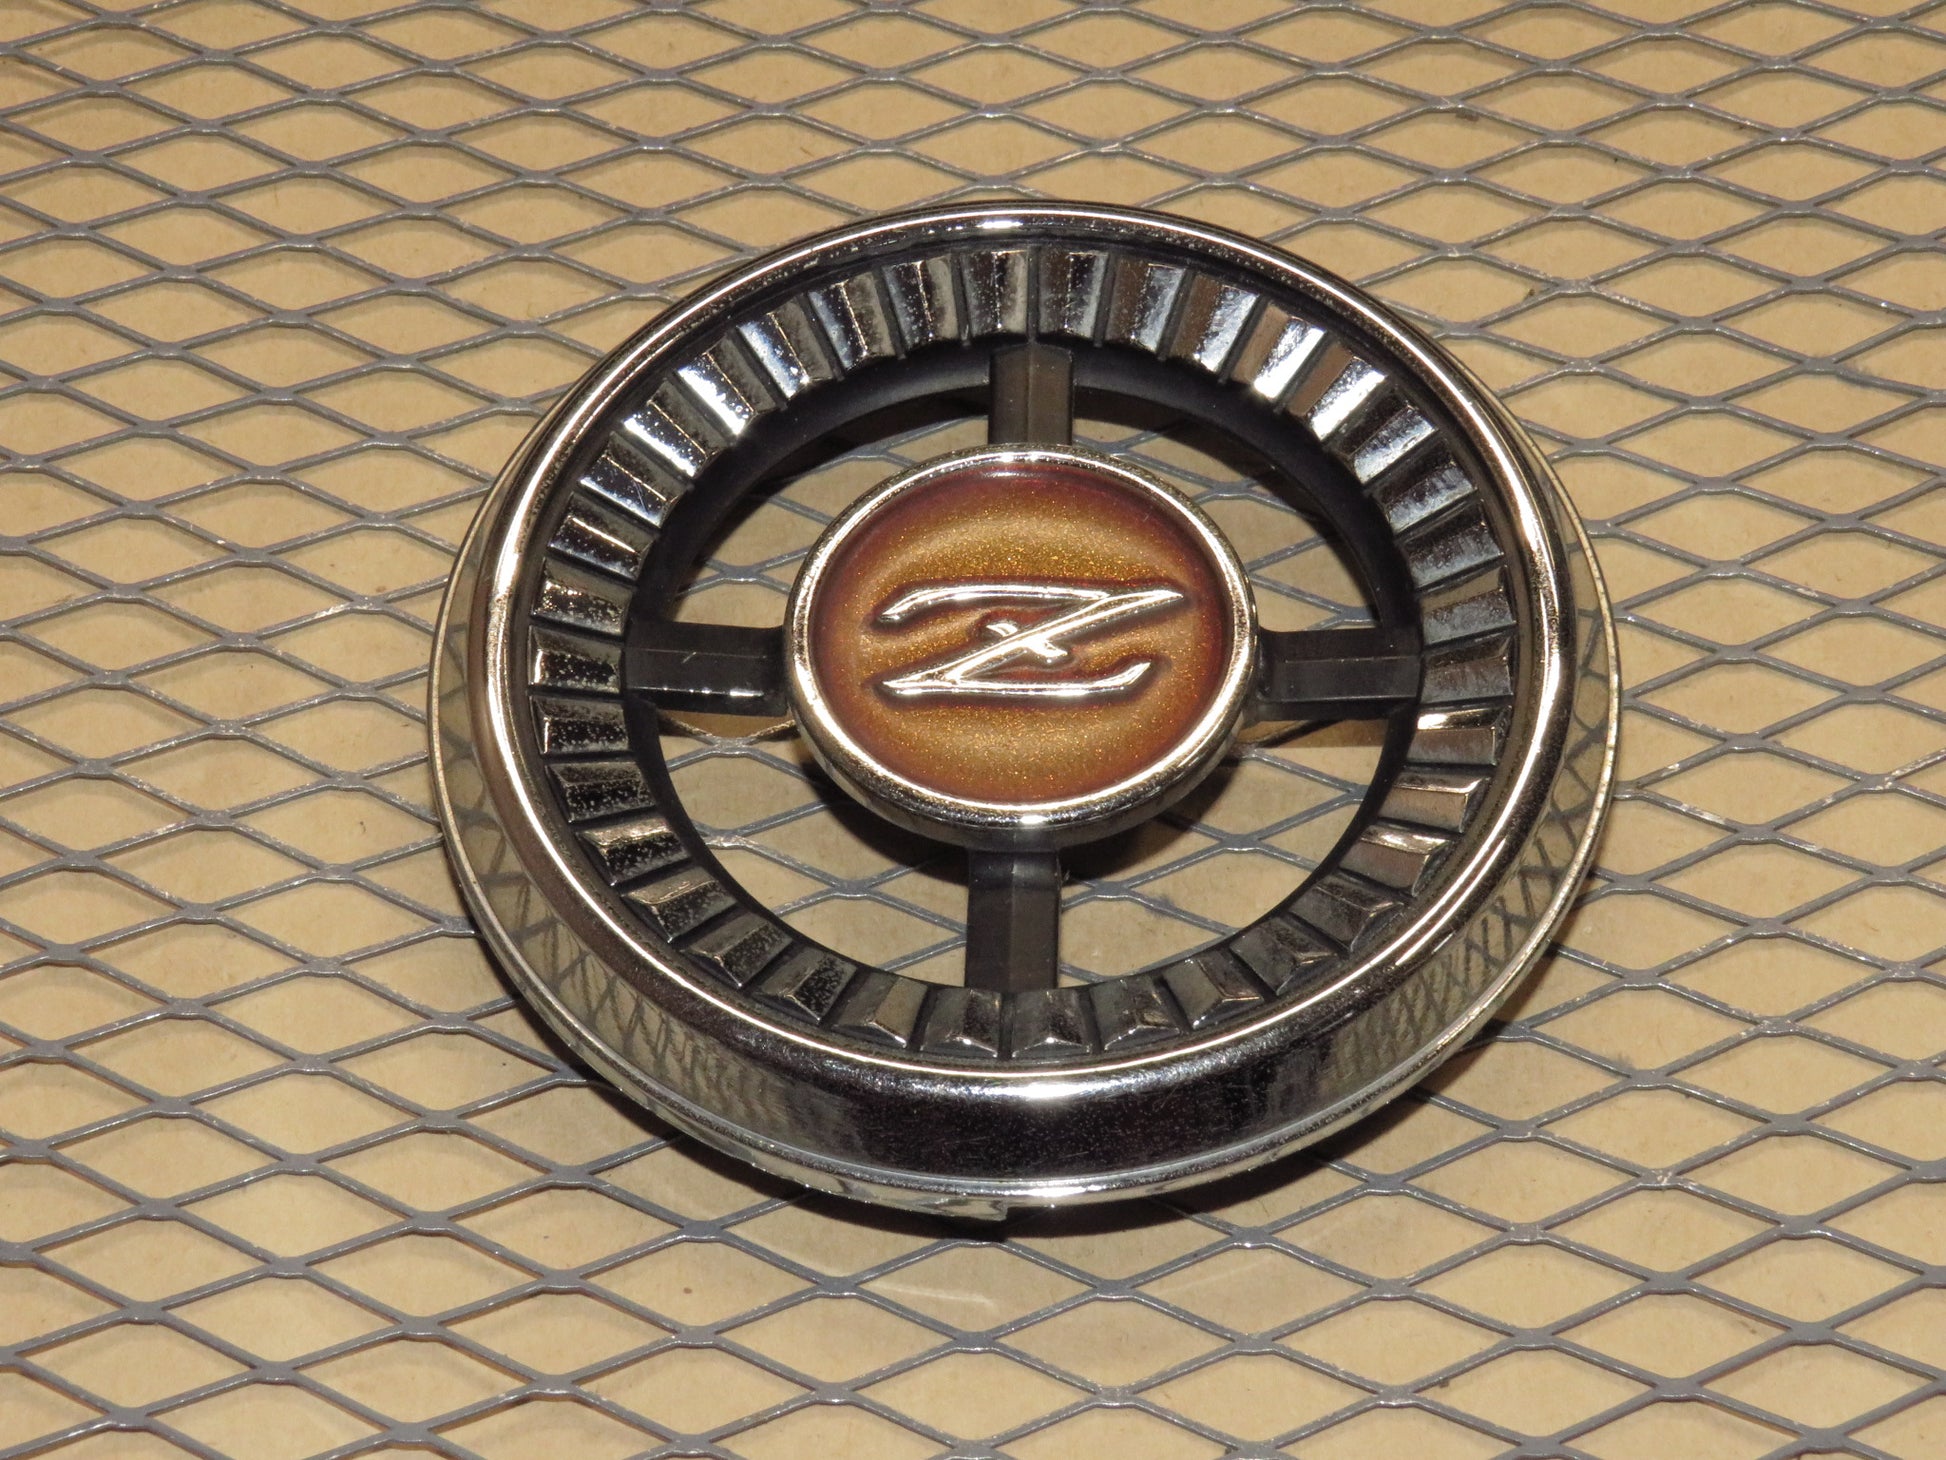 75 76 77 78 Datsun 280z OEM Rear Quarter Panel Badge Emblem - Right